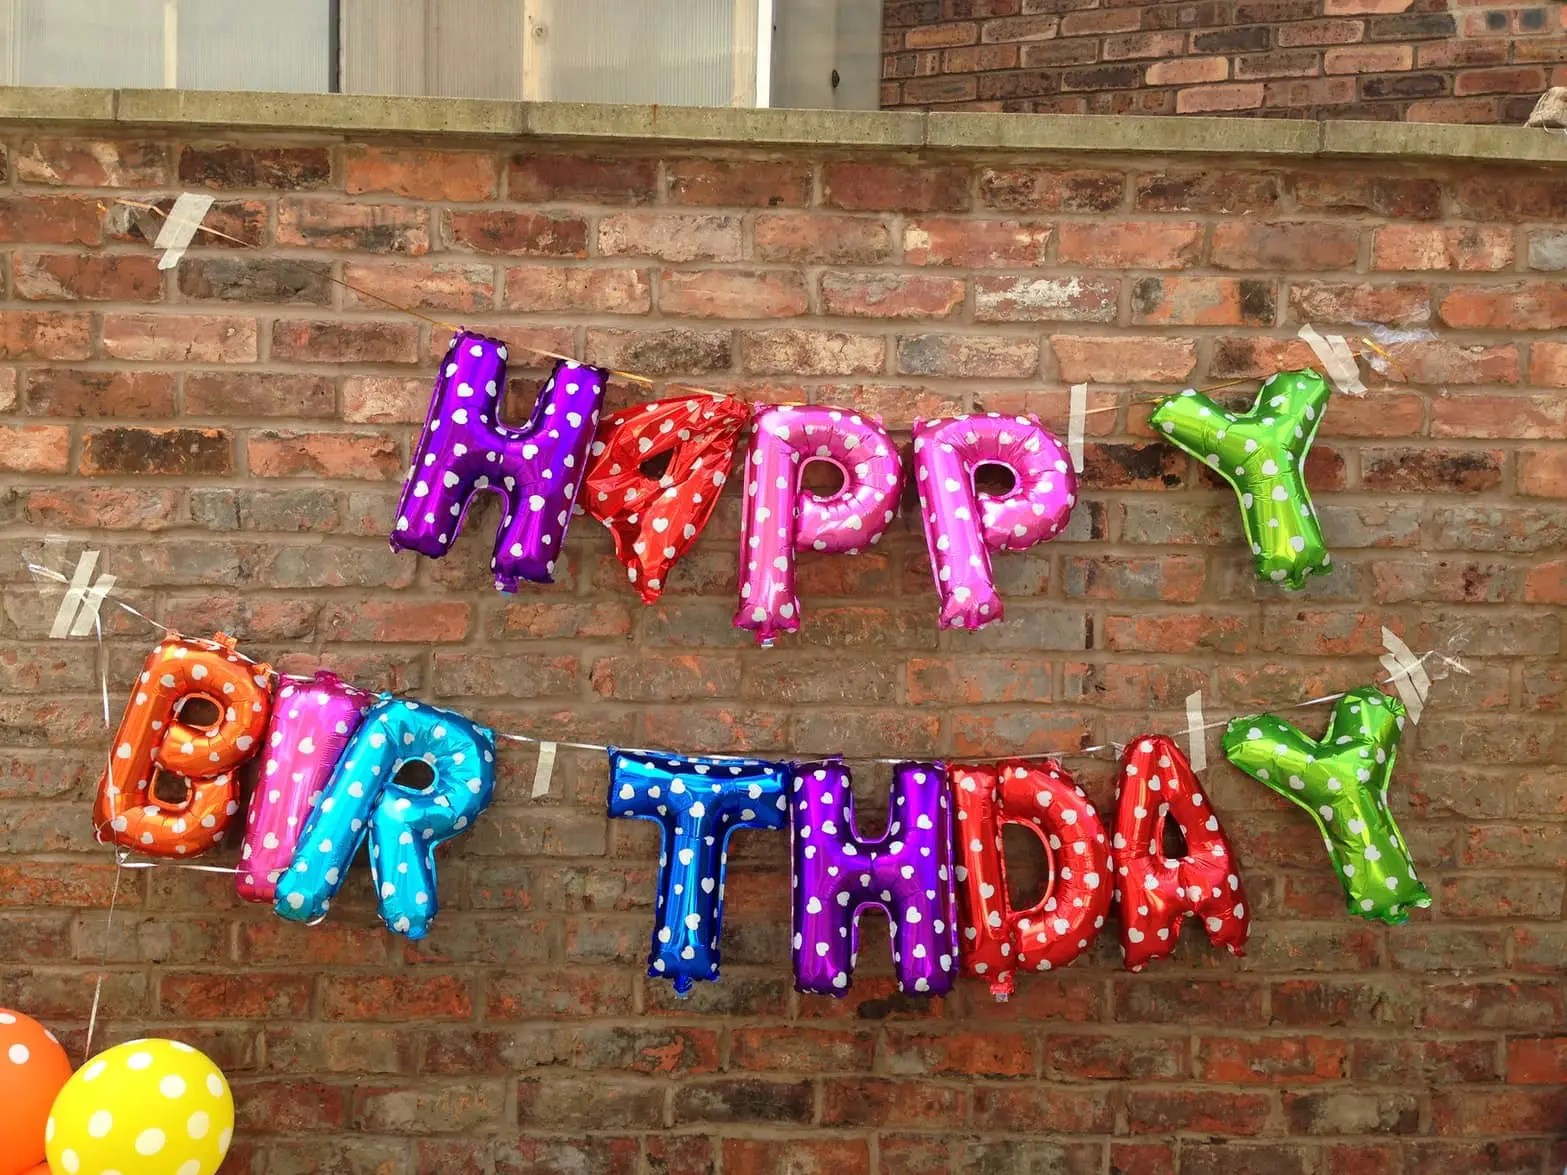 Happy birthday balloons hung from a brick wall